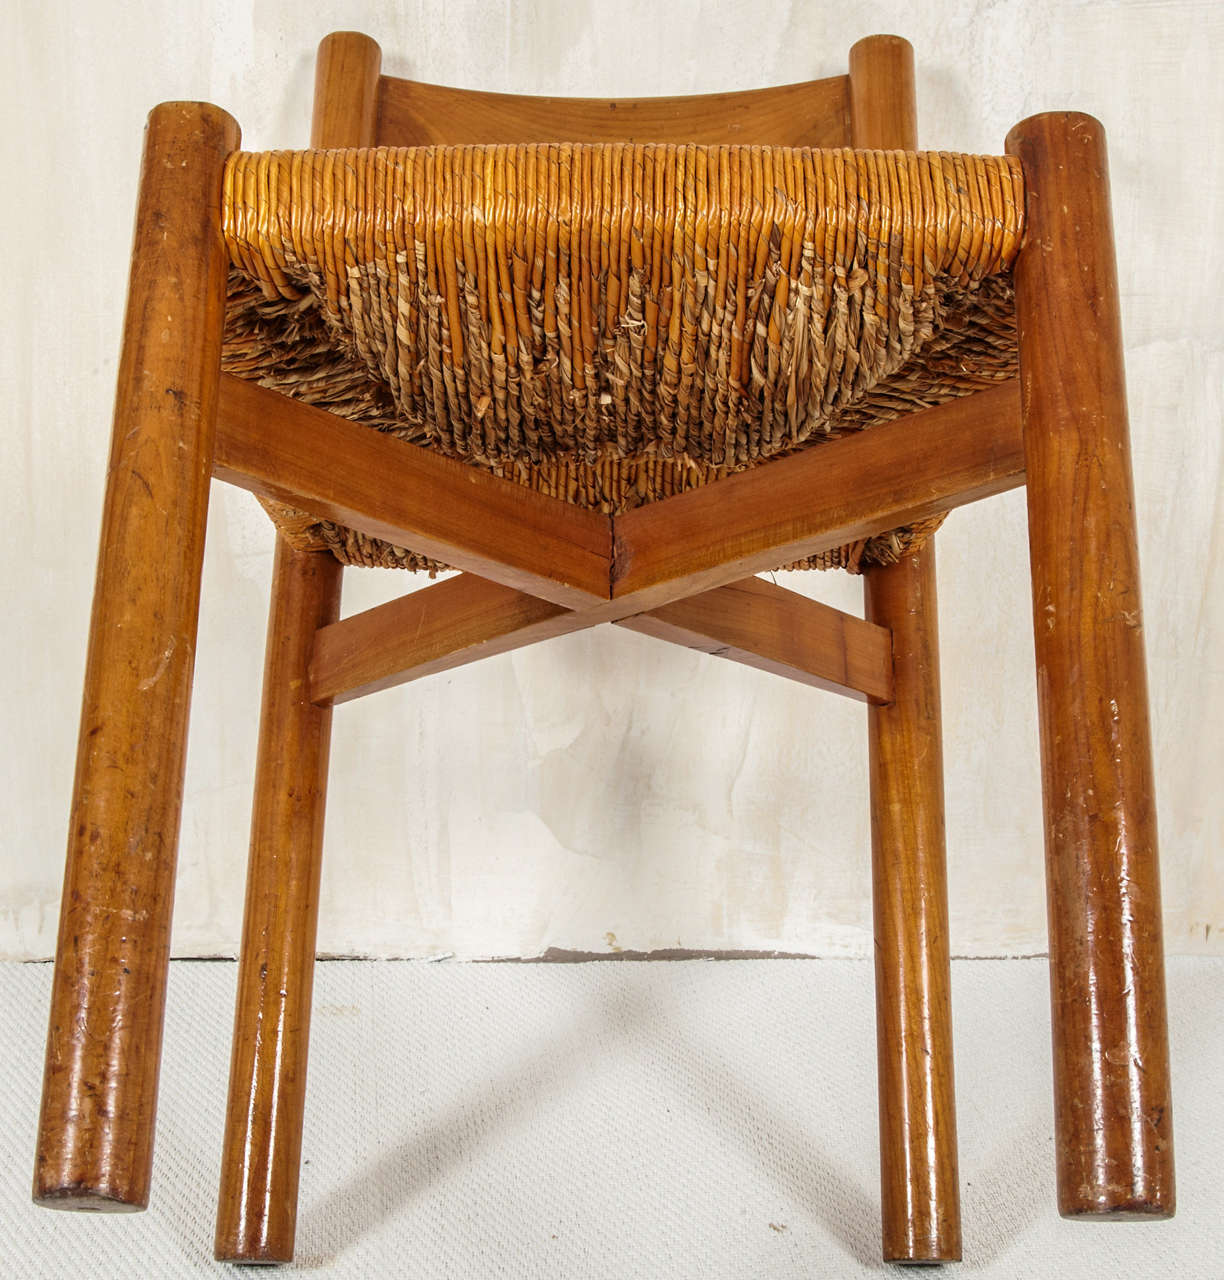 Meribel chair by Charlotte Perriand (1903-1999) 1